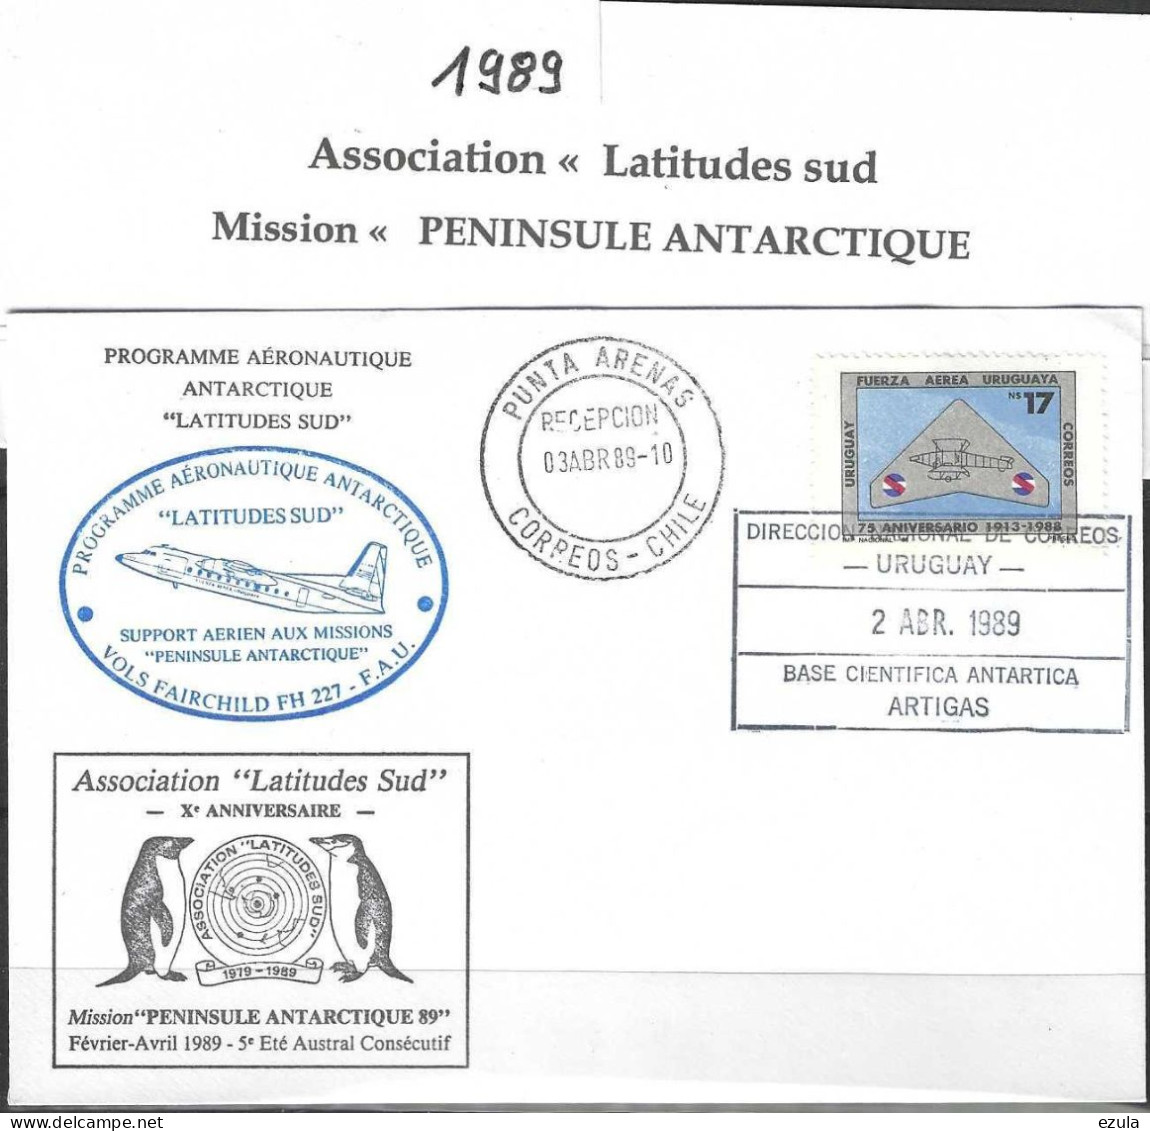 Uruguay -Association Latitude Sud  Mission Péninsule Antarctique 89 - Año Polar Internacional